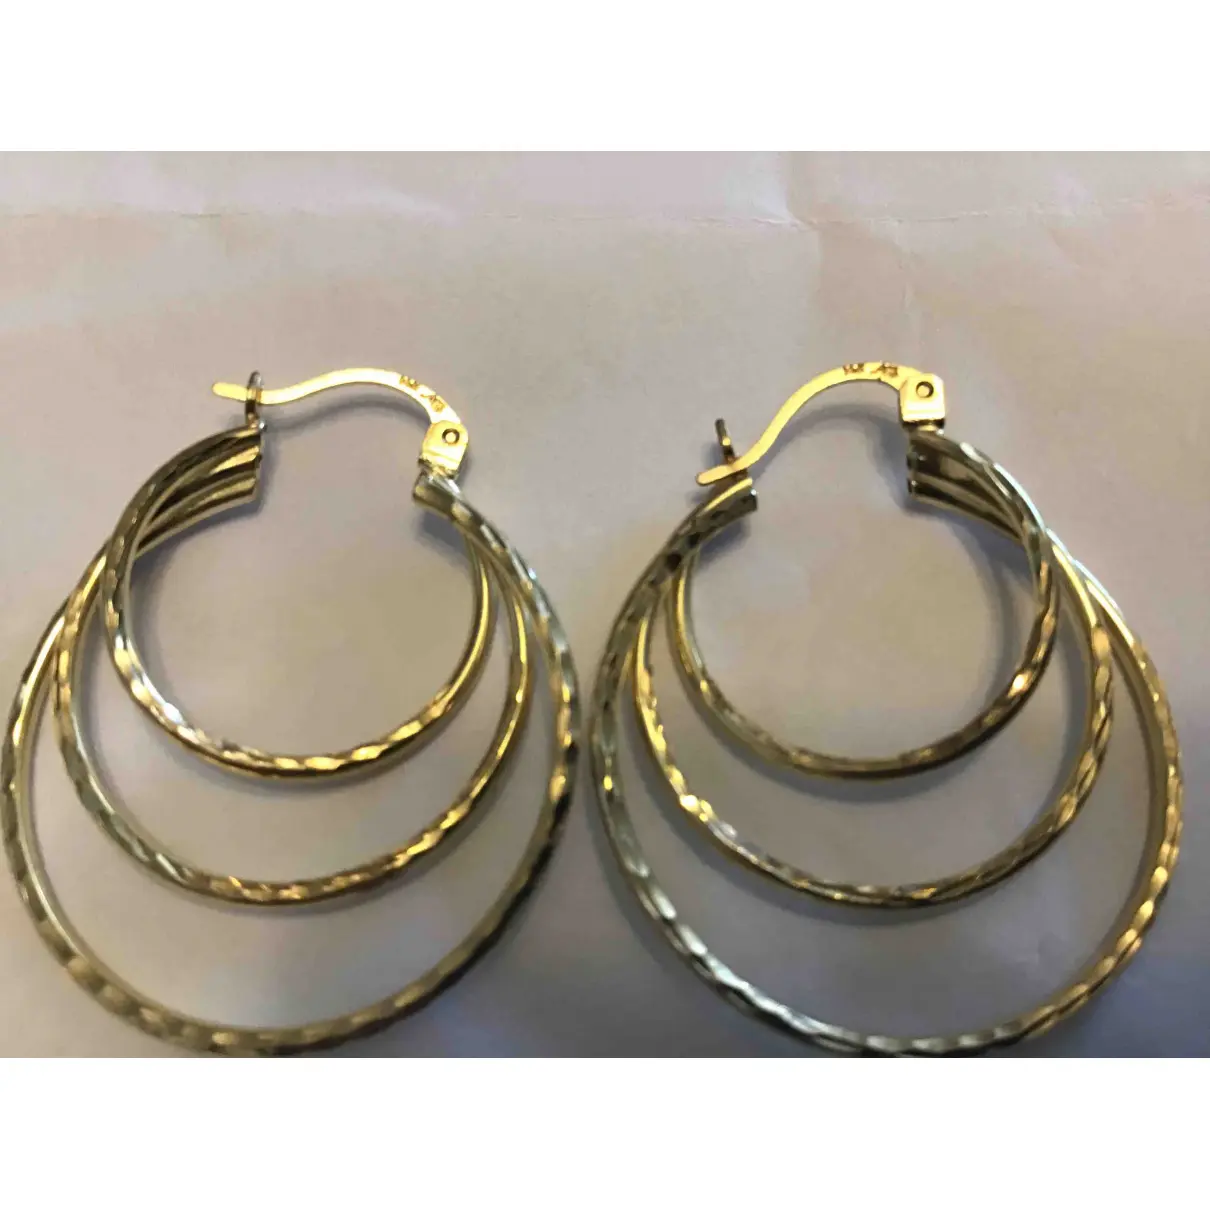 Buy Unknown Yellow gold earrings online